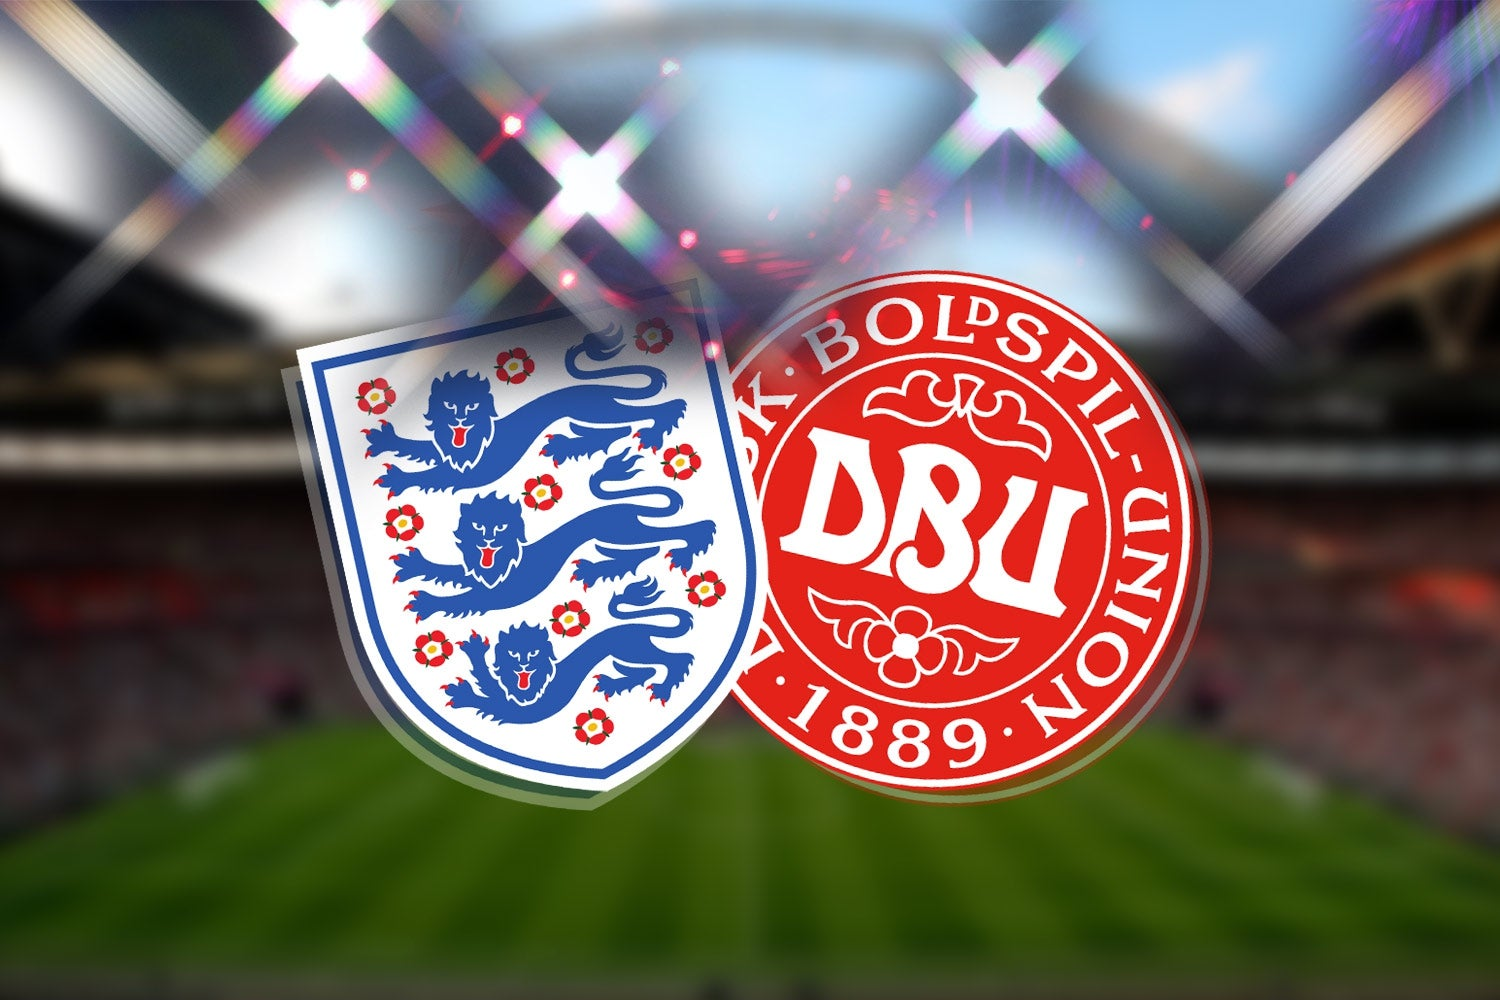 England vs Denmark Semi-finals (July 7): Fixtures, Match Schedule, TV Channels, Live Stream